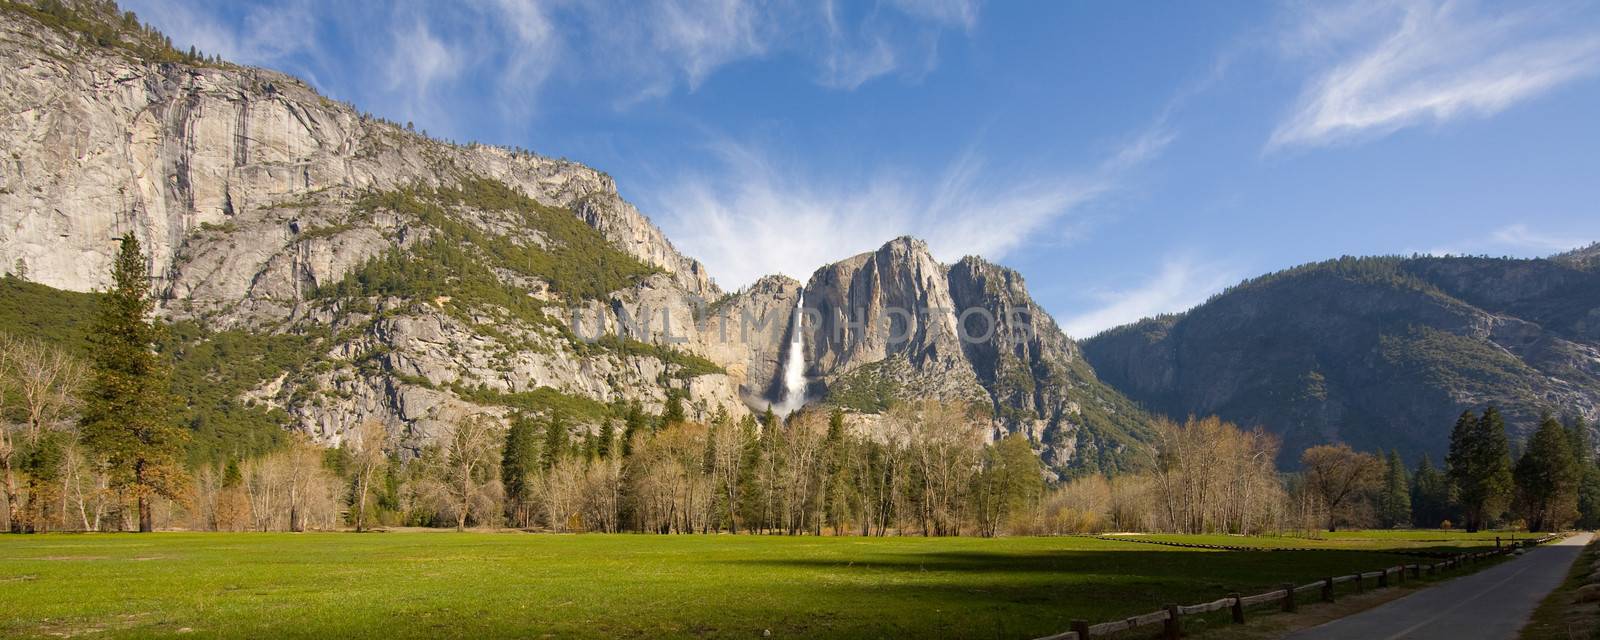 Water falling from rocks, Yosemite Falls, Yosemite Valley, Yosemite National Park, California, USA